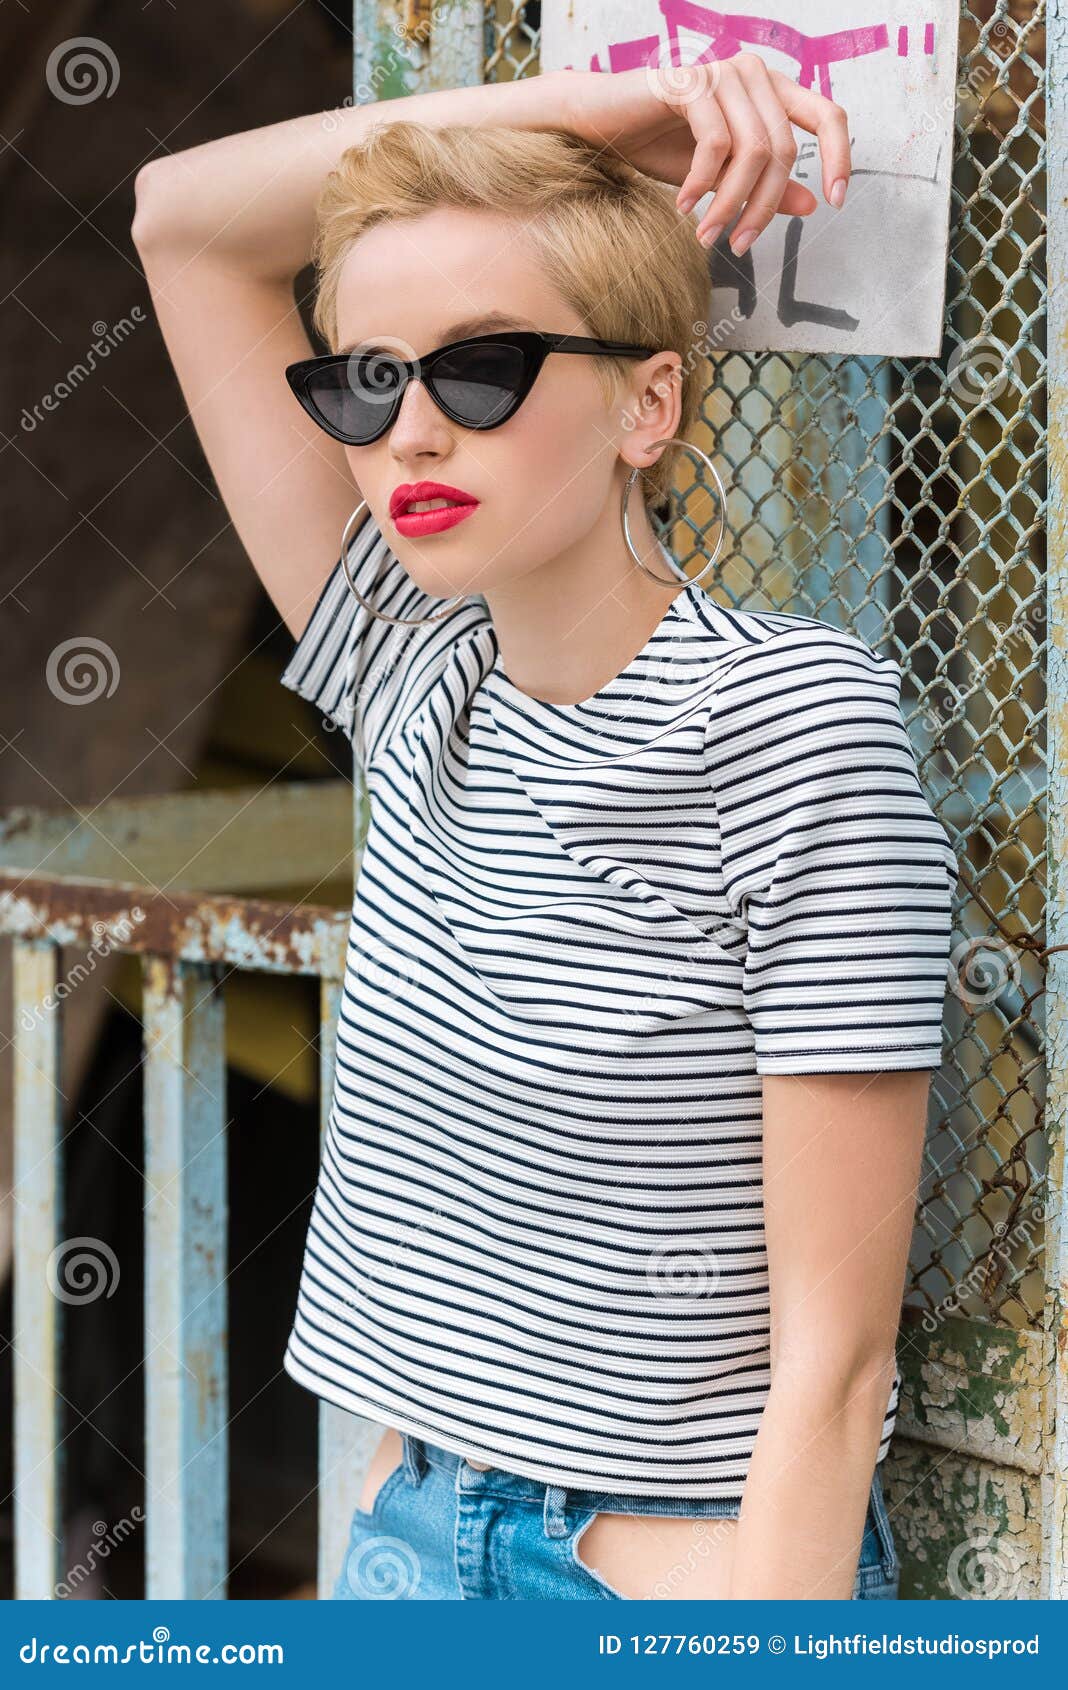 QUAY x JLO All In Mini Sunglasses - BLK on Mercari | Jennifer lopez hair,  Jlo hair, Hair styles